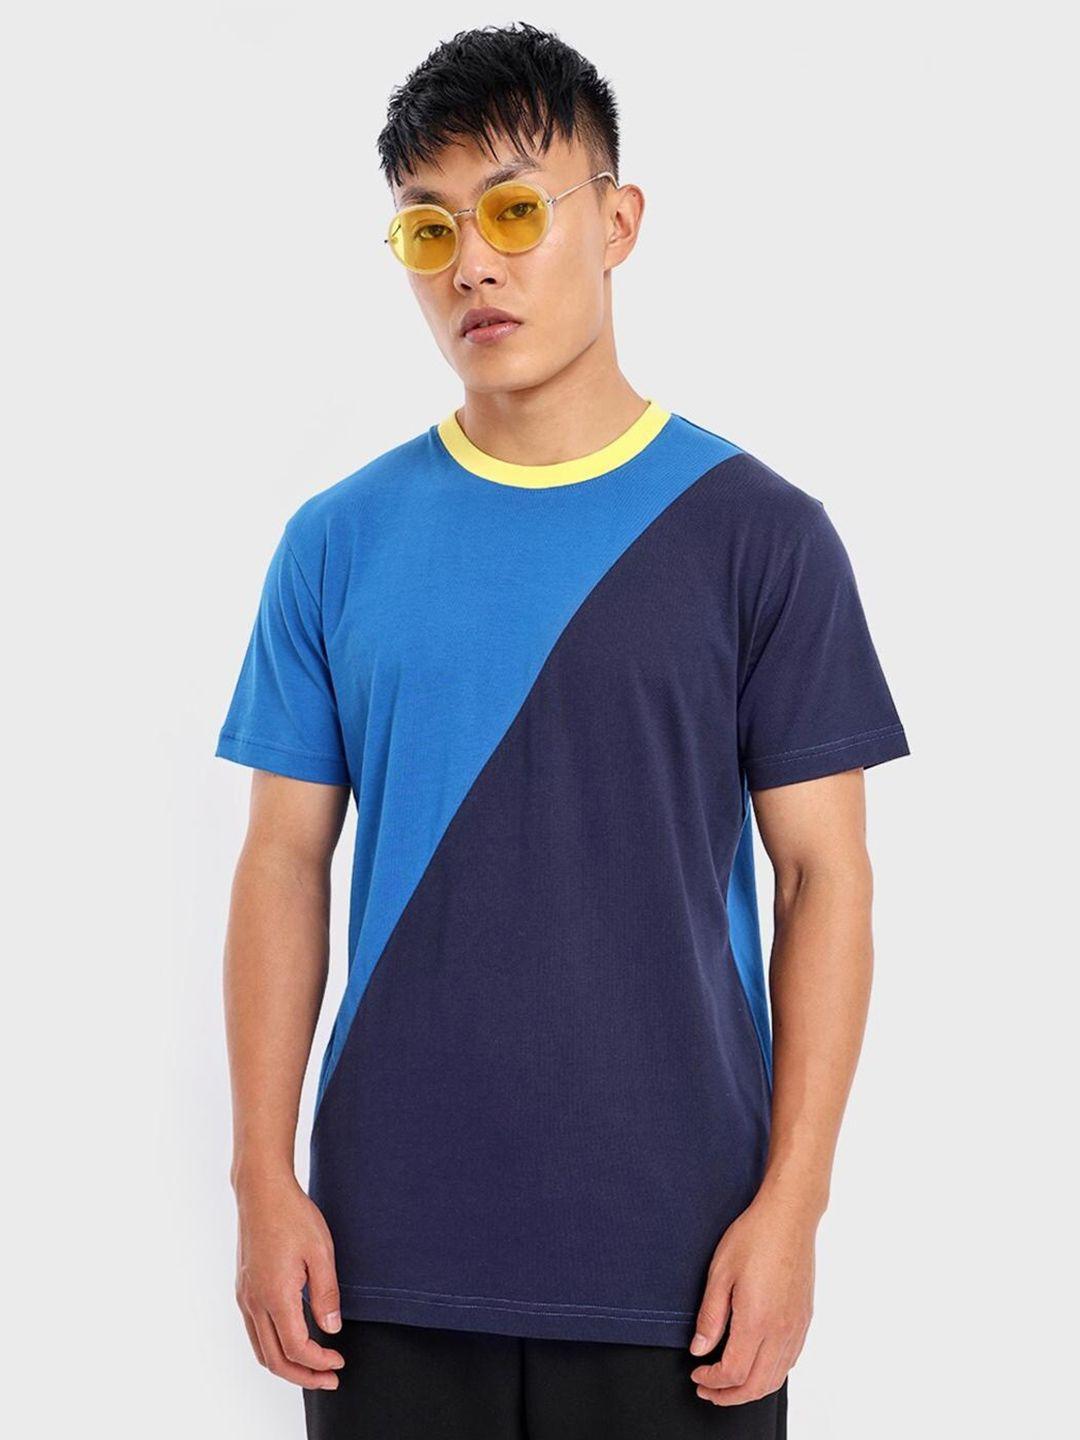 bewakoof-men-cotton-colourblocked-t-shirt